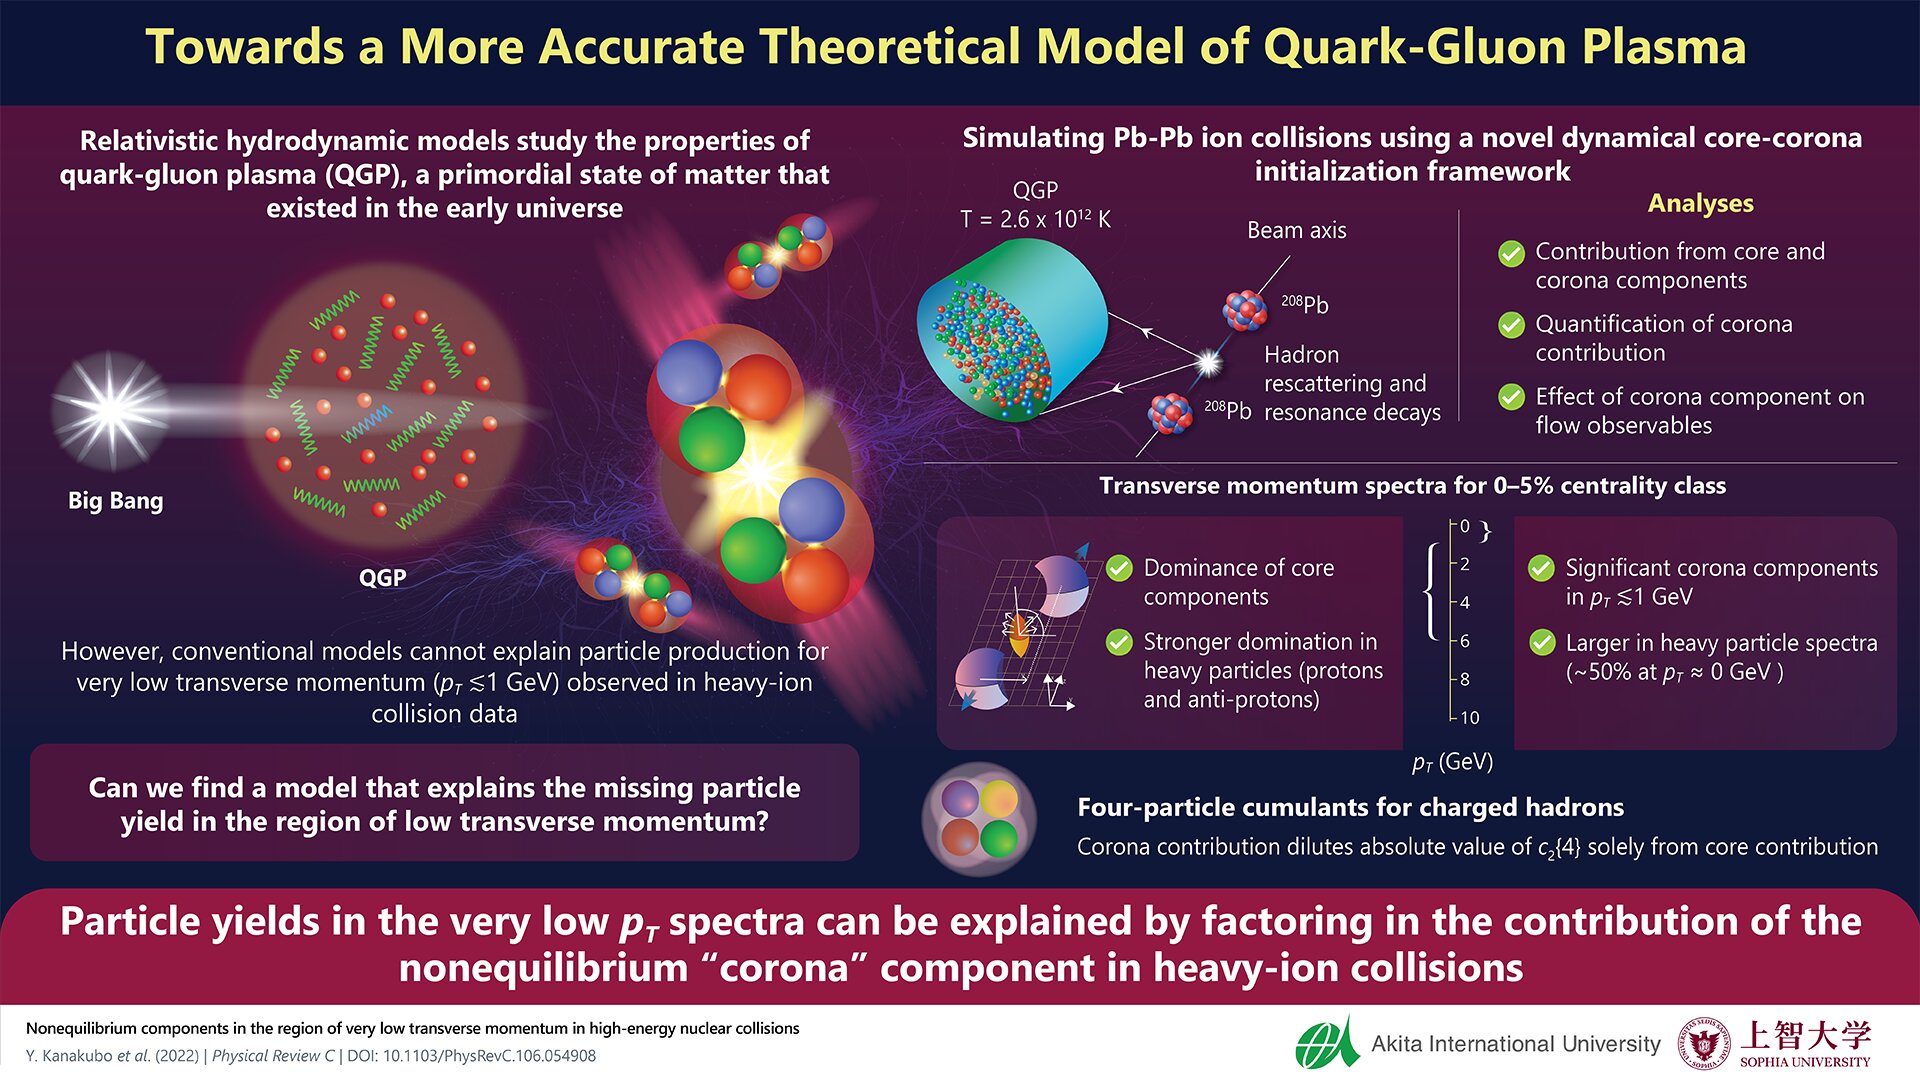 https://scx2.b-cdn.net/gfx/news/hires/2023/new-model-of-quark-glu.jpg